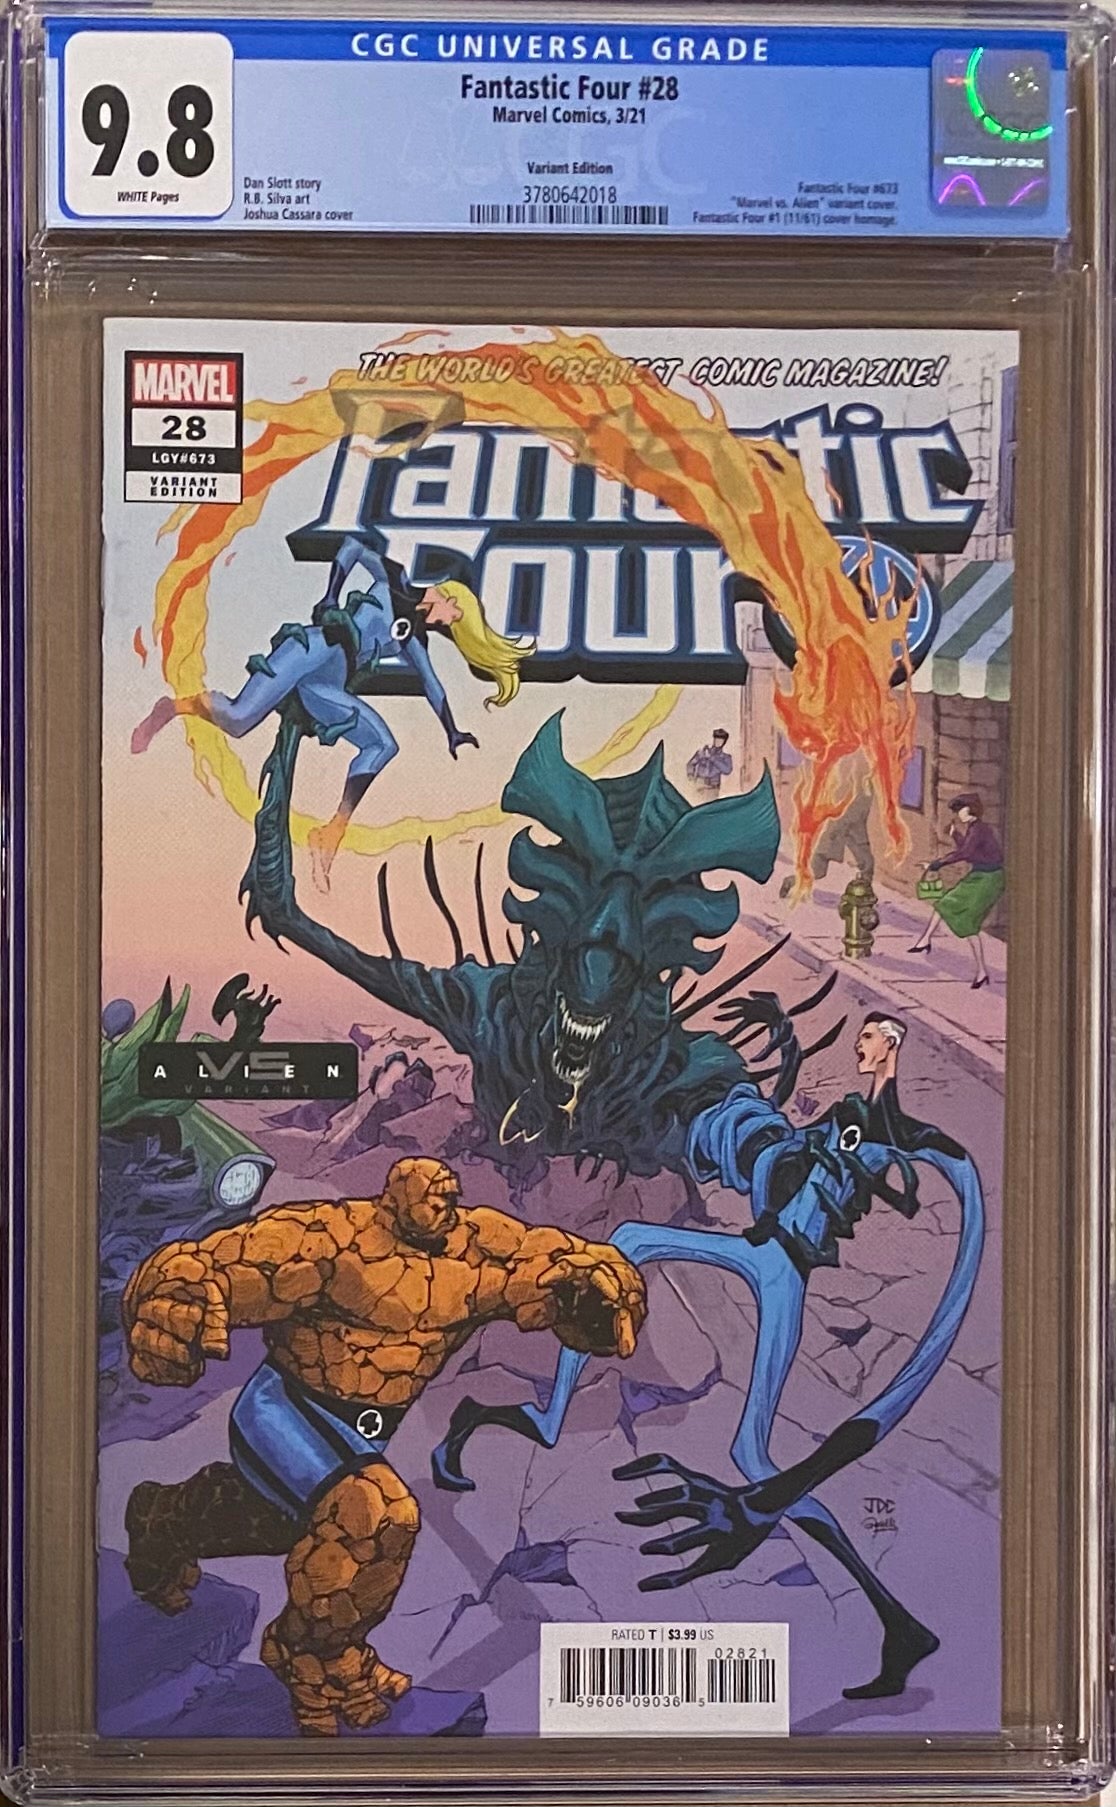 Fantastic Four #28 "Marvel vs. Aliens" Variant CGC 9.8